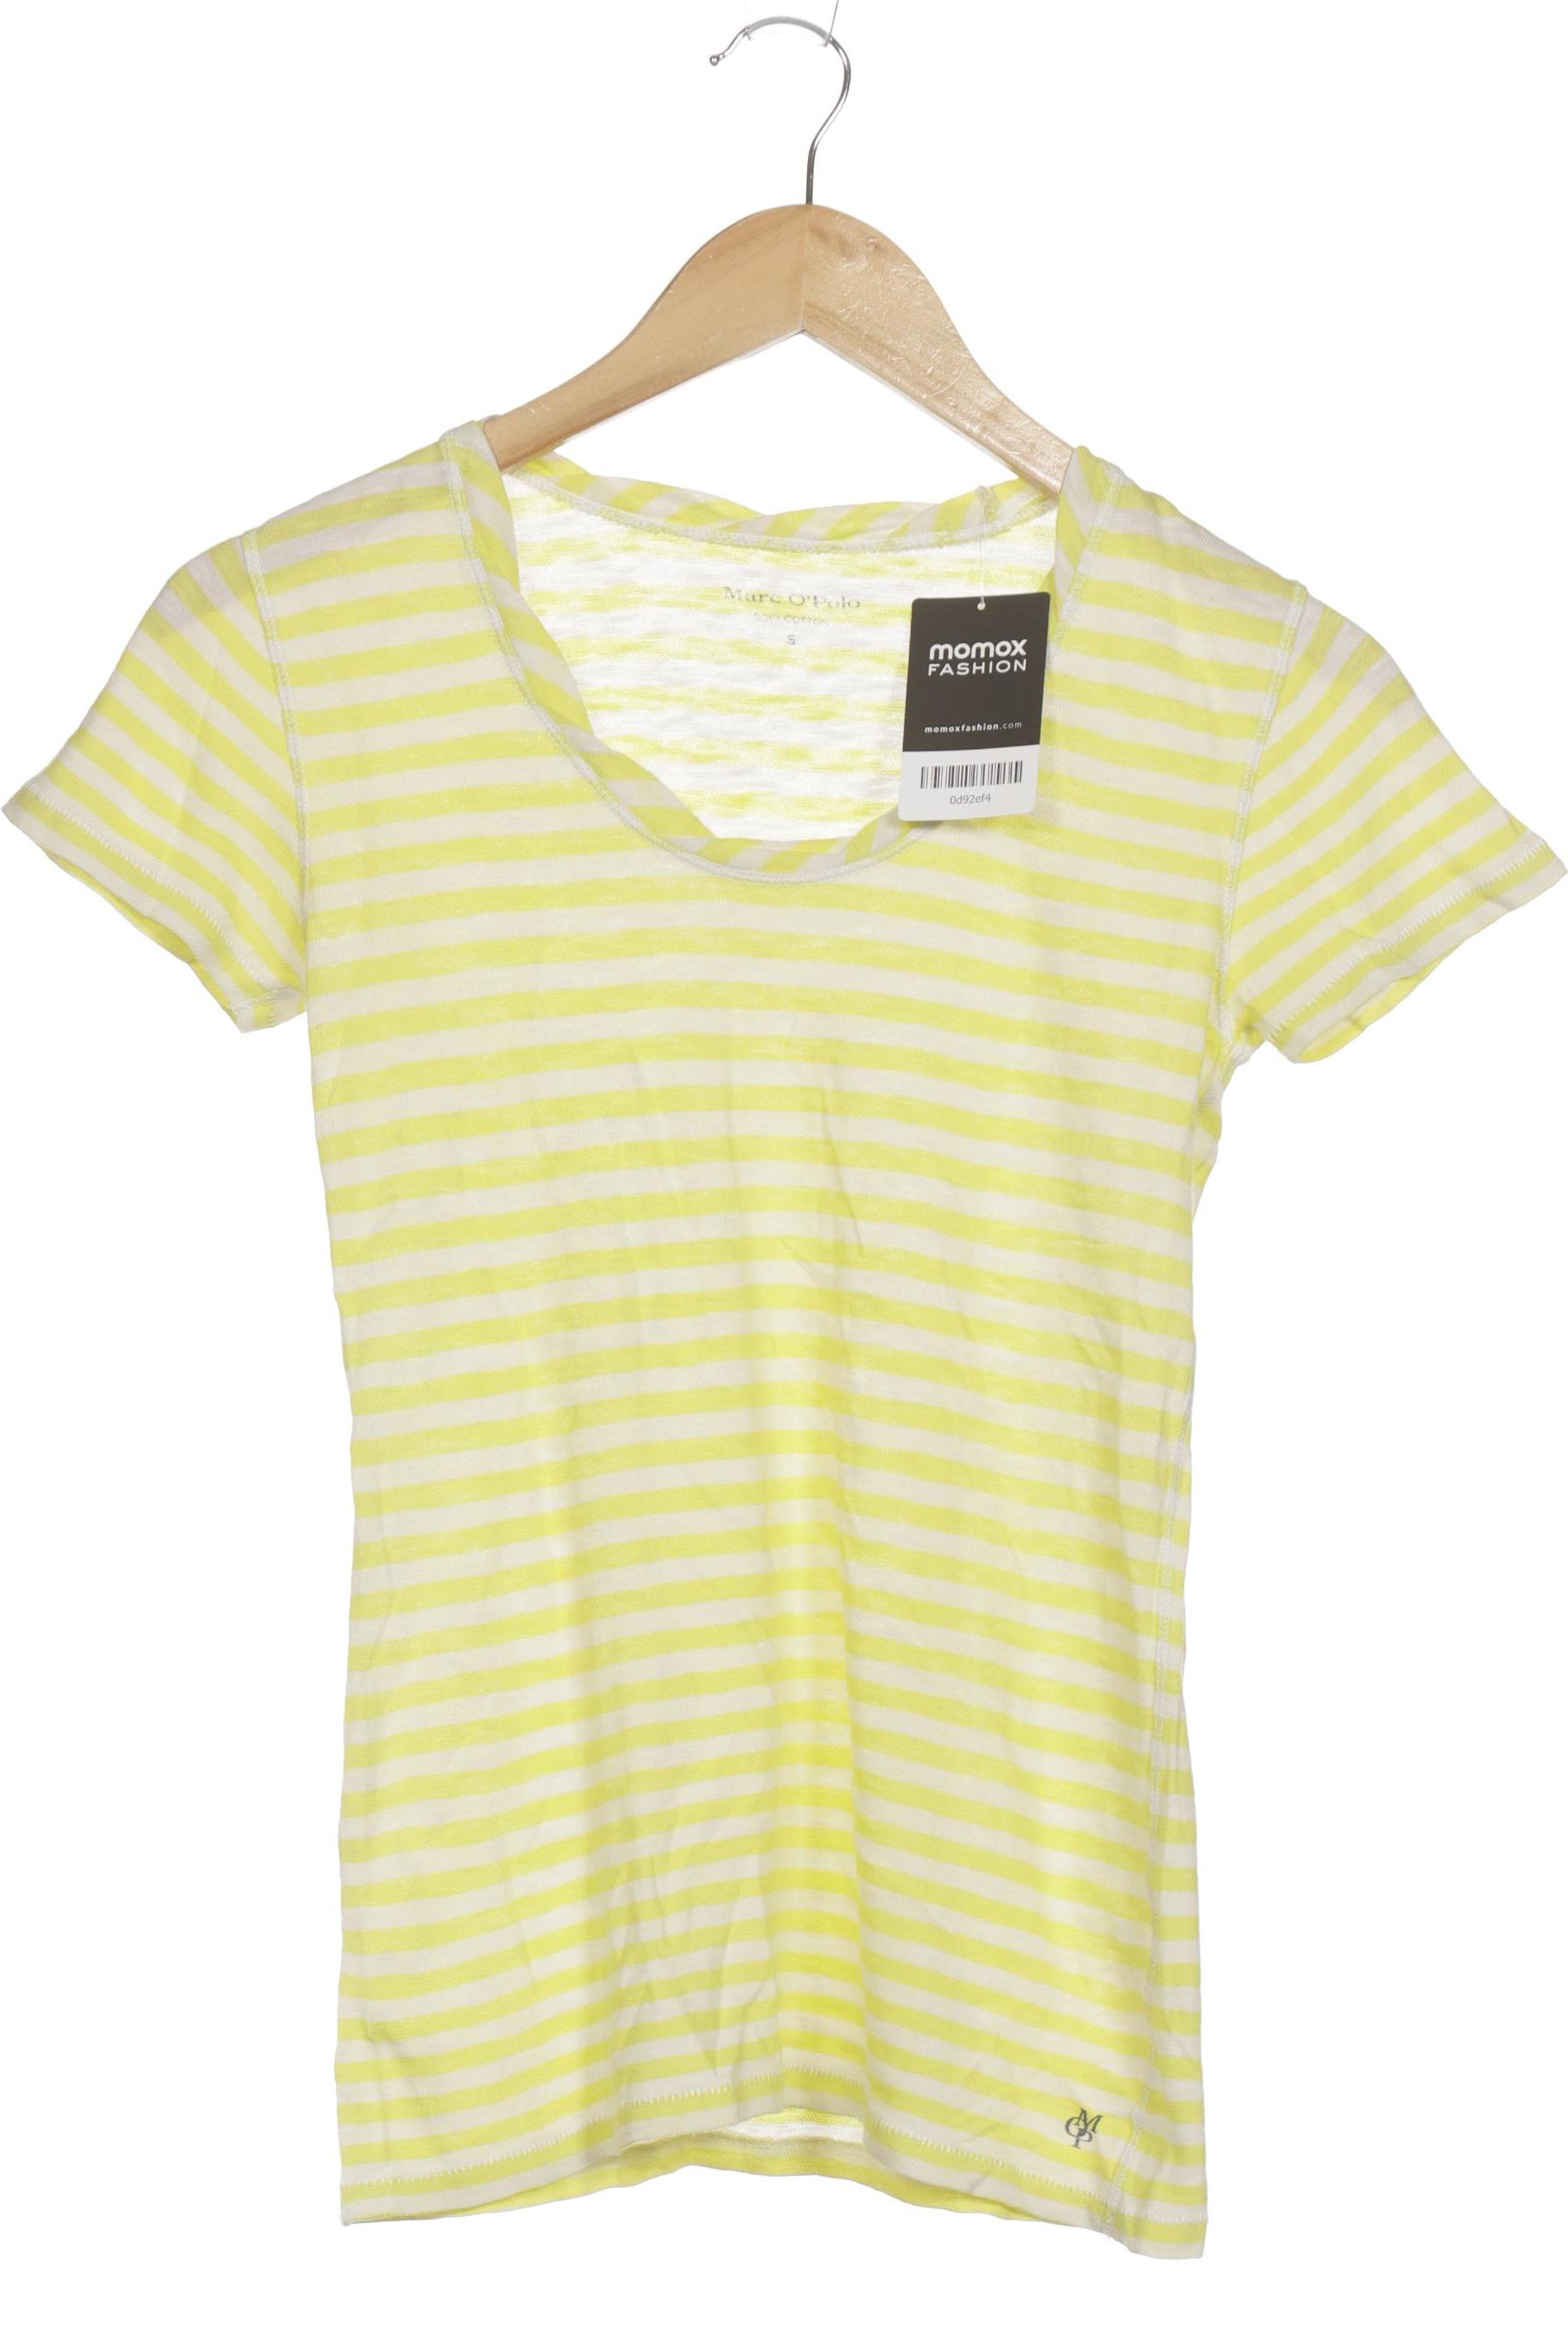 Image of Marc O Polo Damen T-Shirt gelb INT S Baumwolle kein Etikett